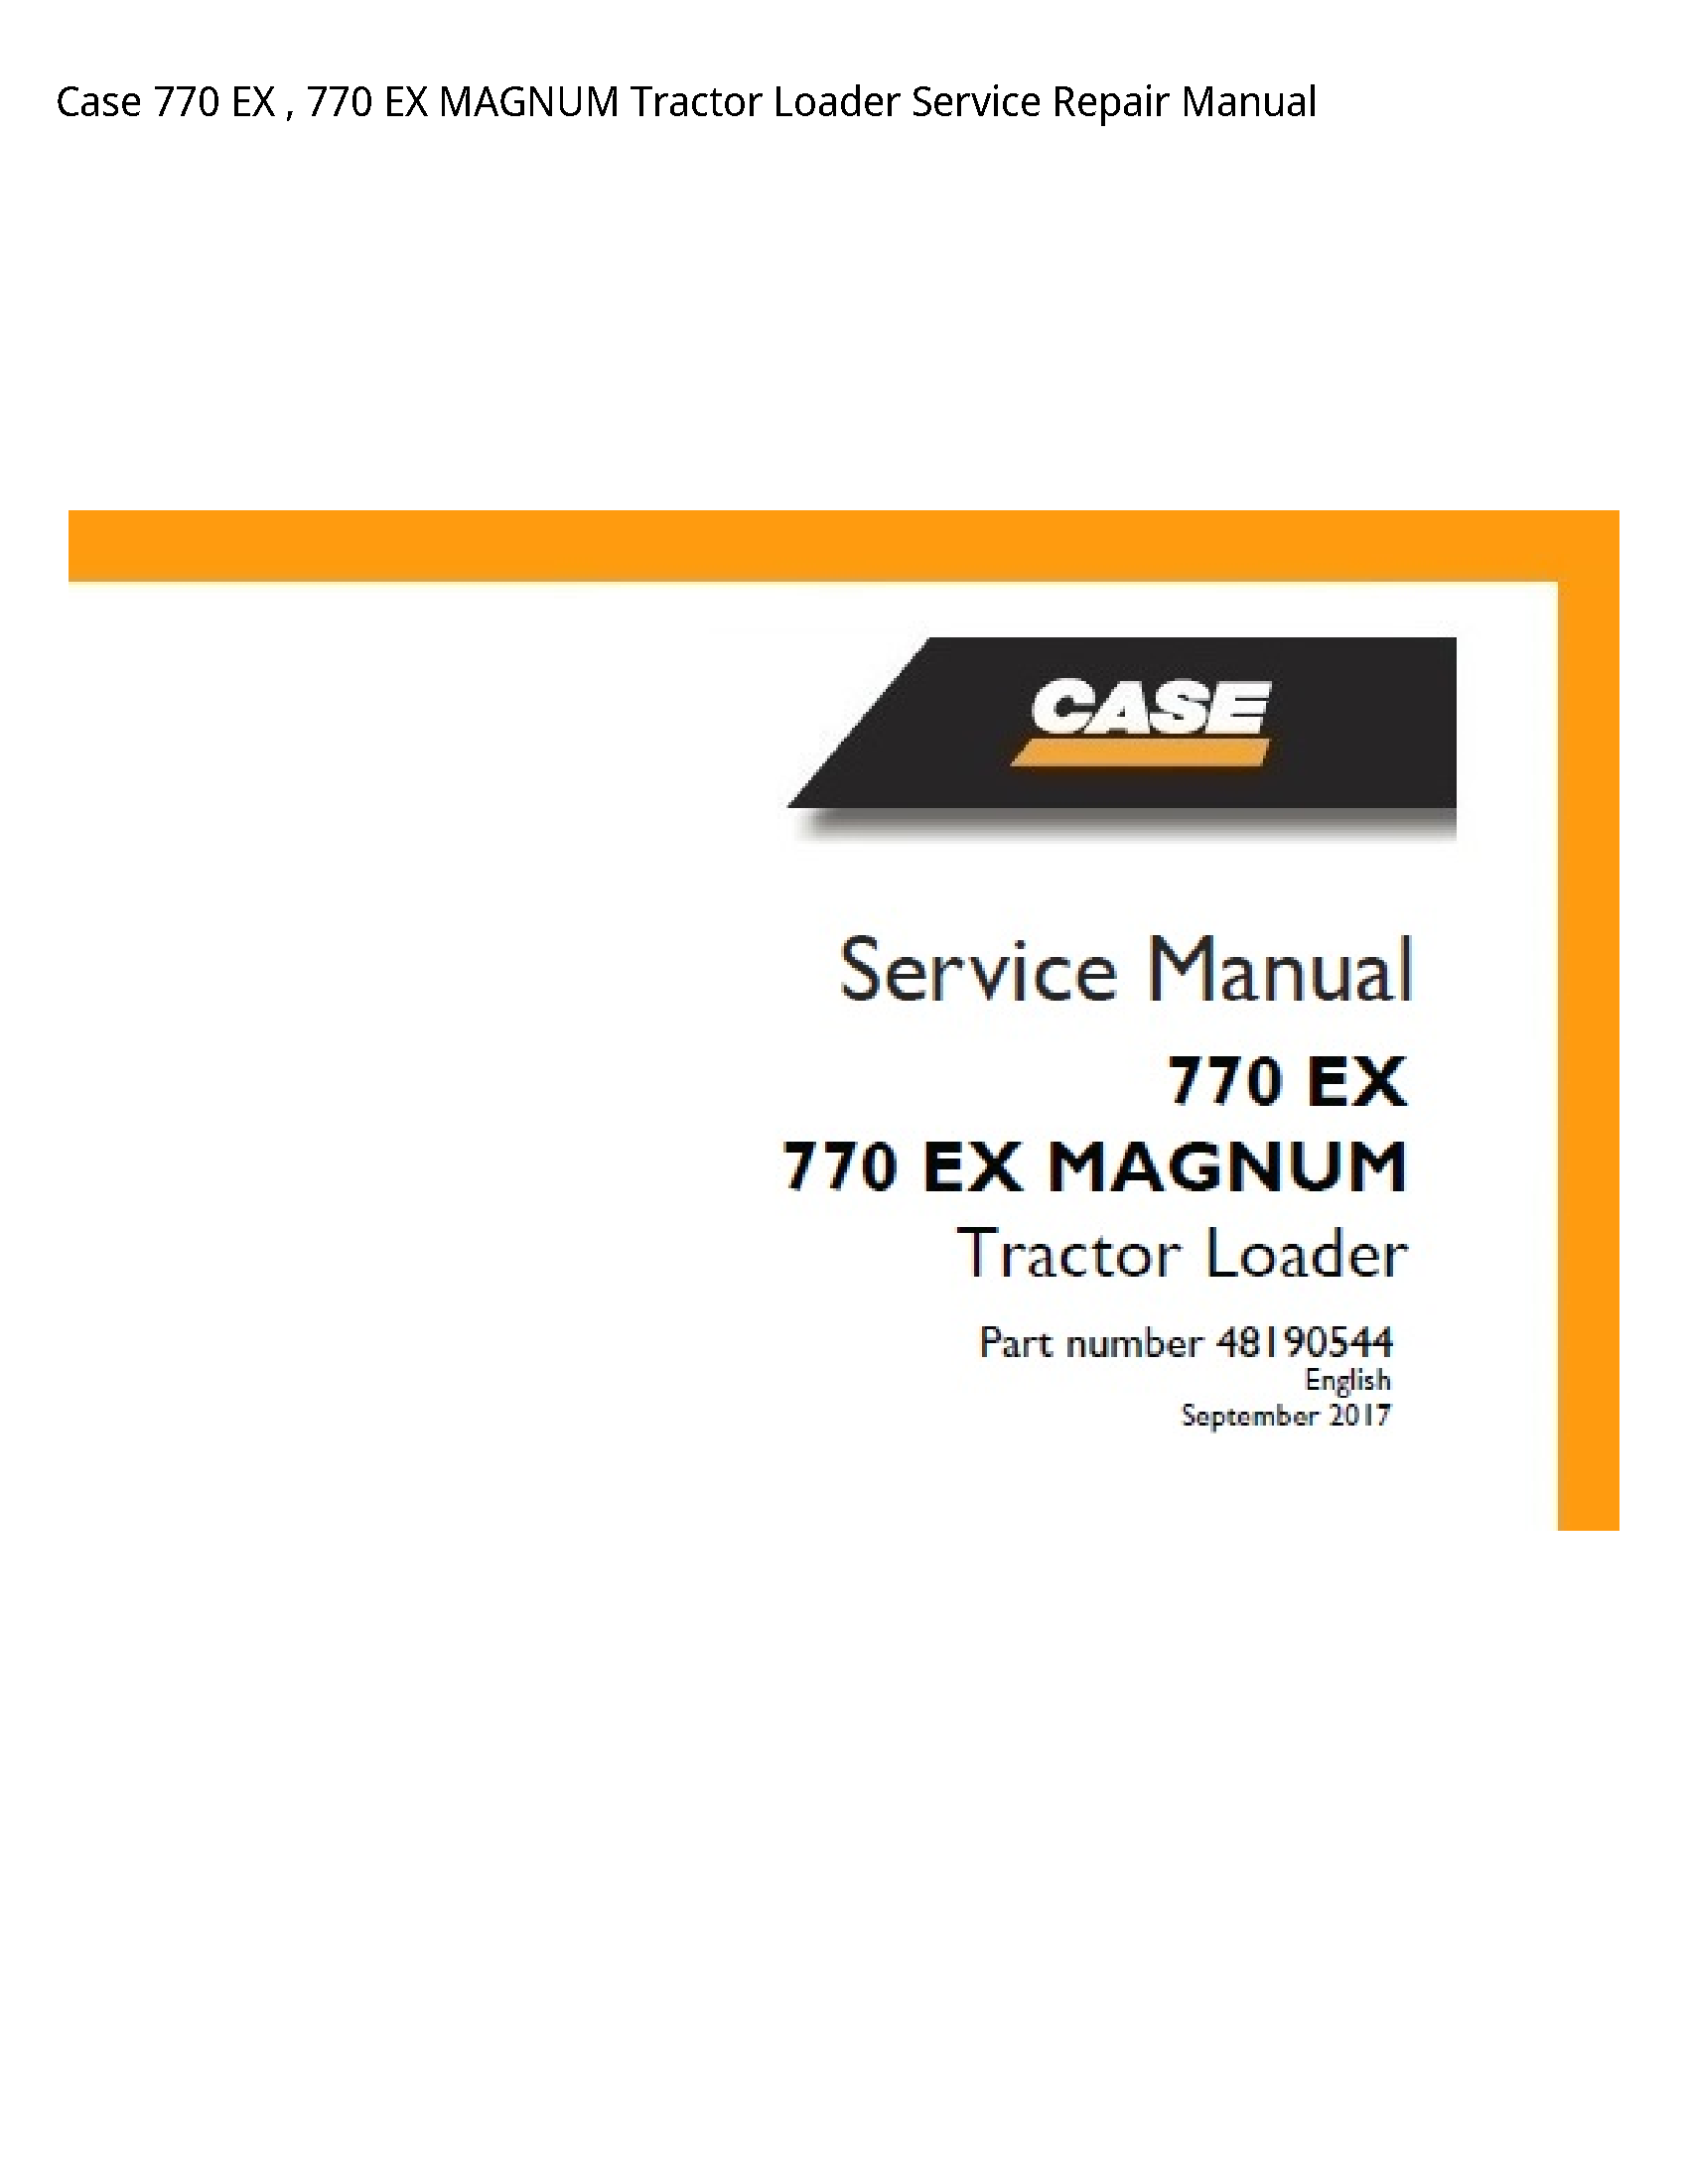 Case/Case IH 770 EX EX MAGNUM Tractor Loader manual